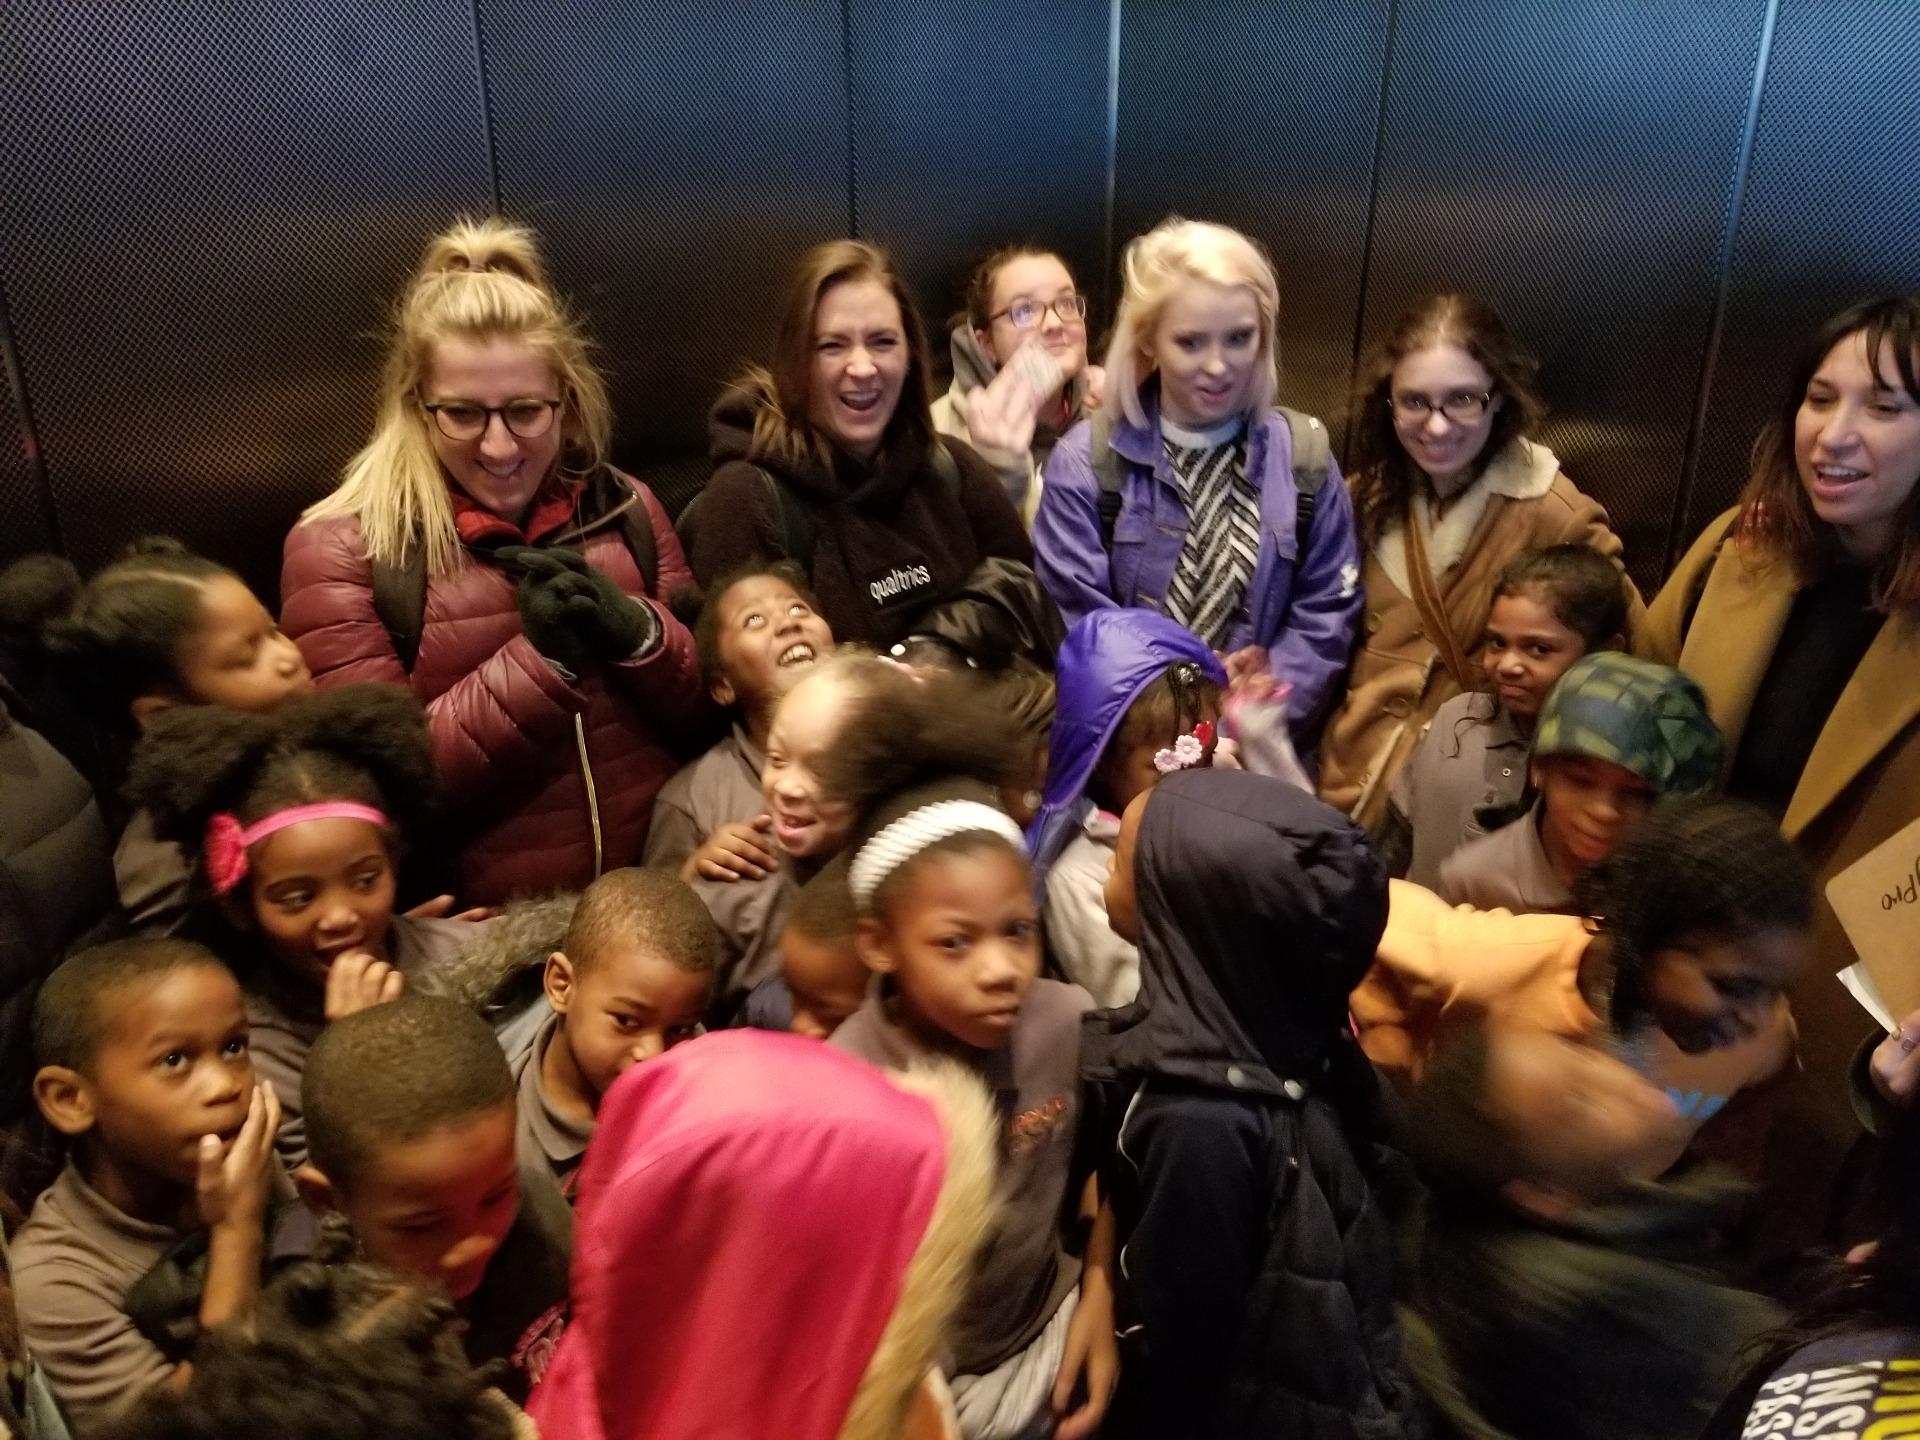 9 Pelicans and 30 Kindergartners Got into an Elevator...